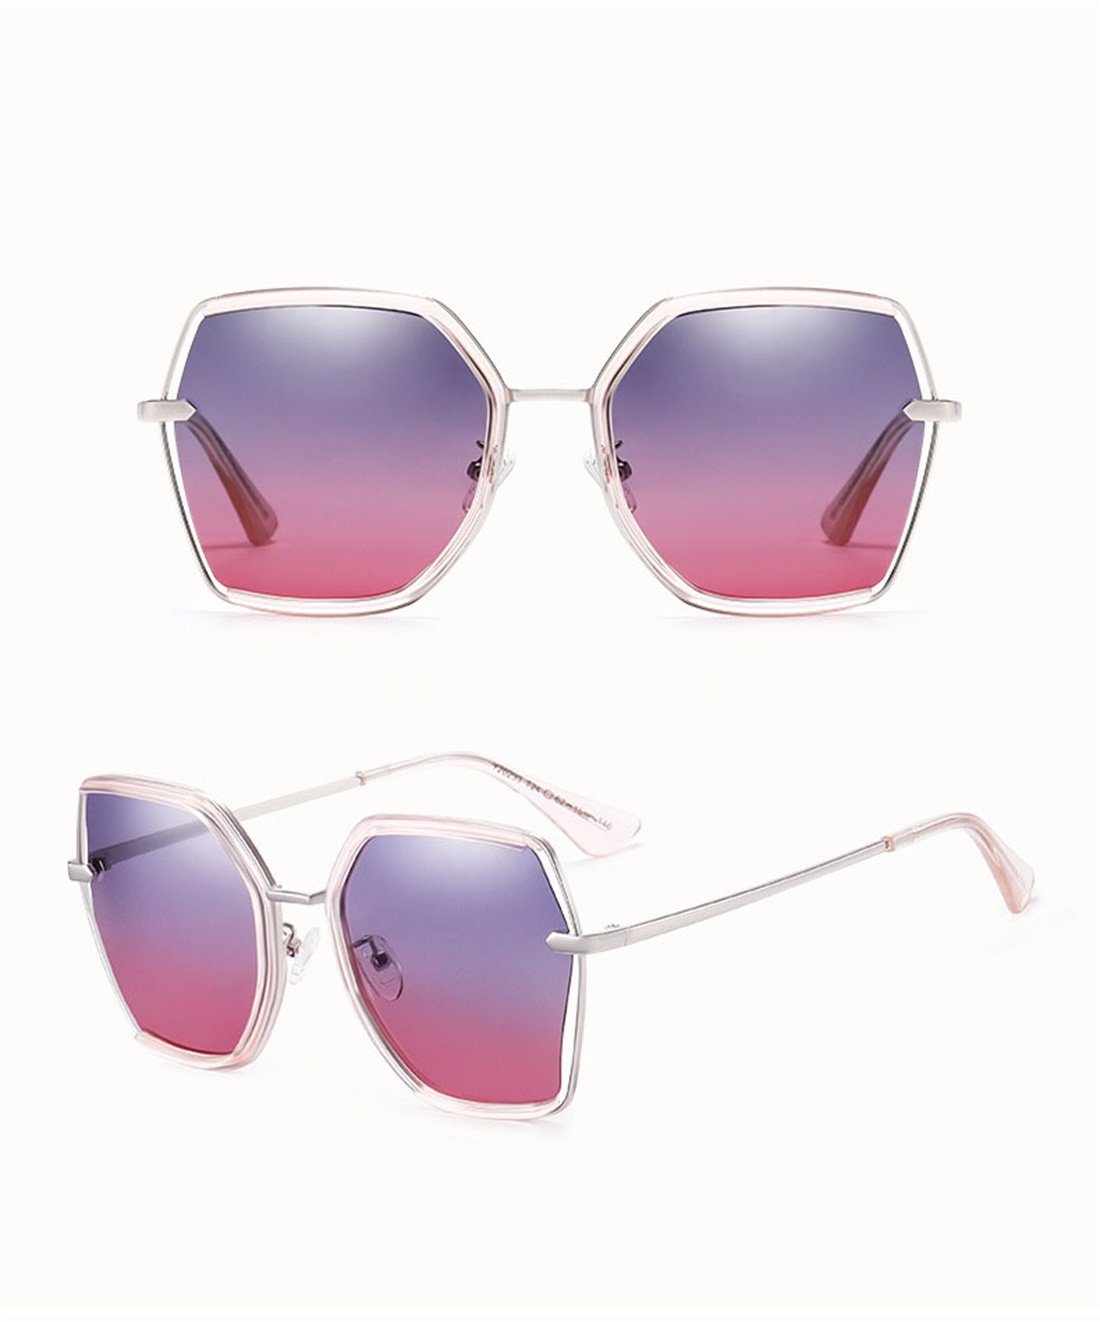 Sonnenschirme DÖRÖY Sonnenbrille, Damen Braun polarisierte Sonnenbrille Box Mode Sonnenbrille